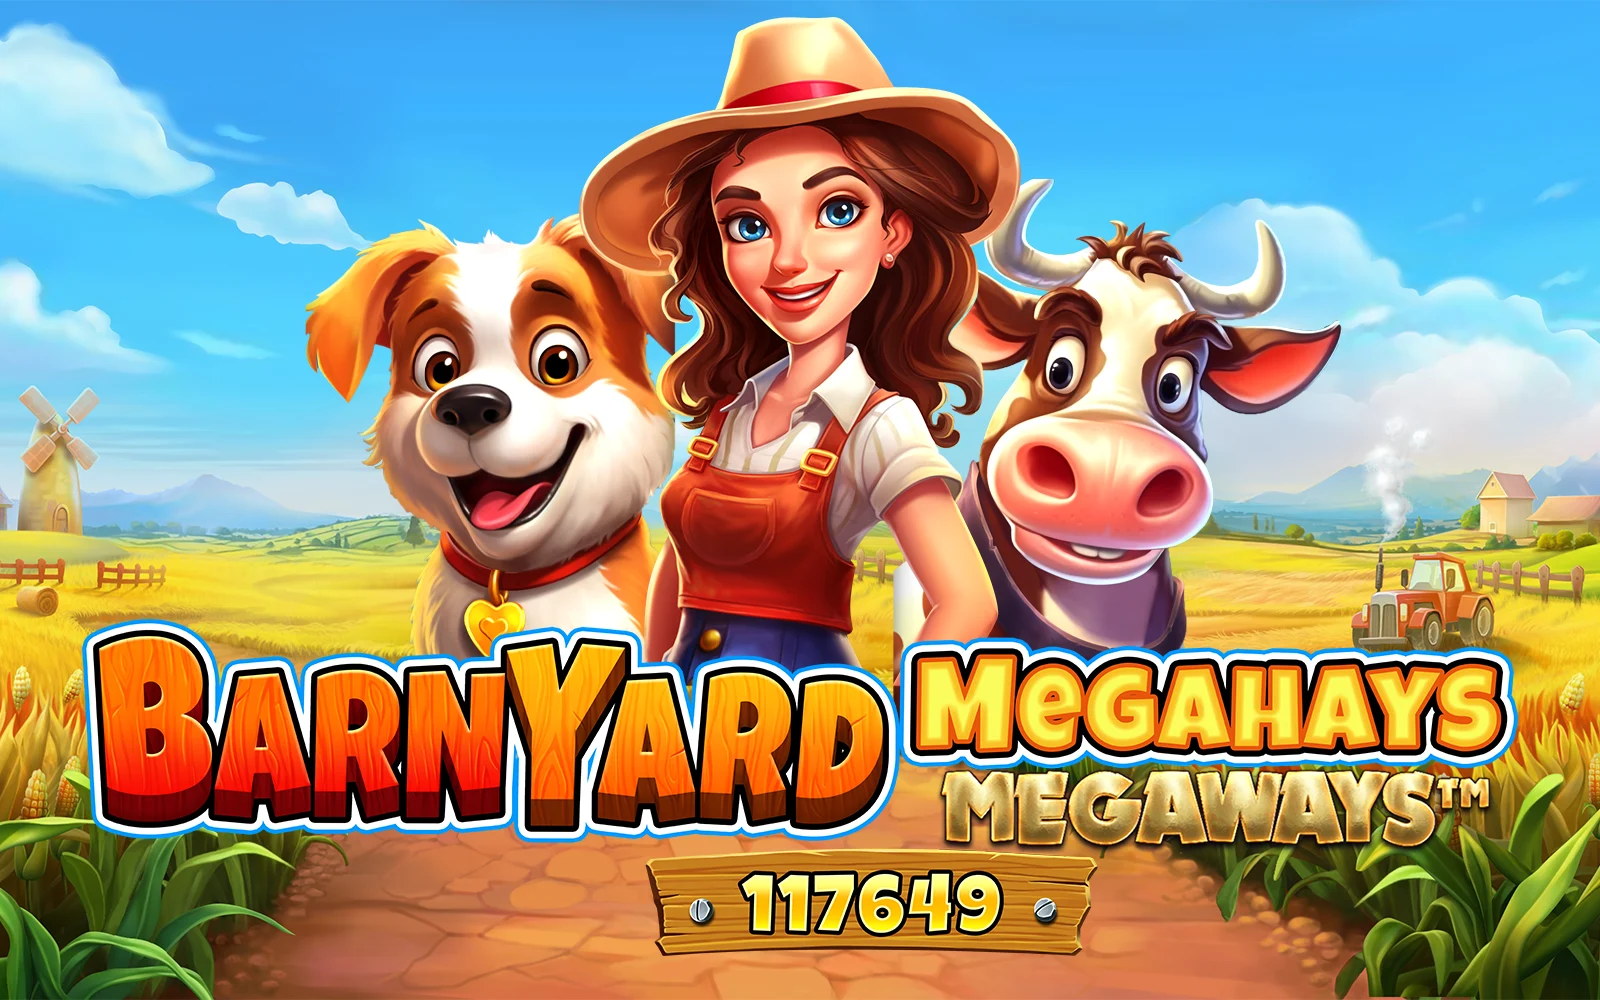 Joacă Barnyard Megahays Megaways™ în cazinoul online Starcasino.be